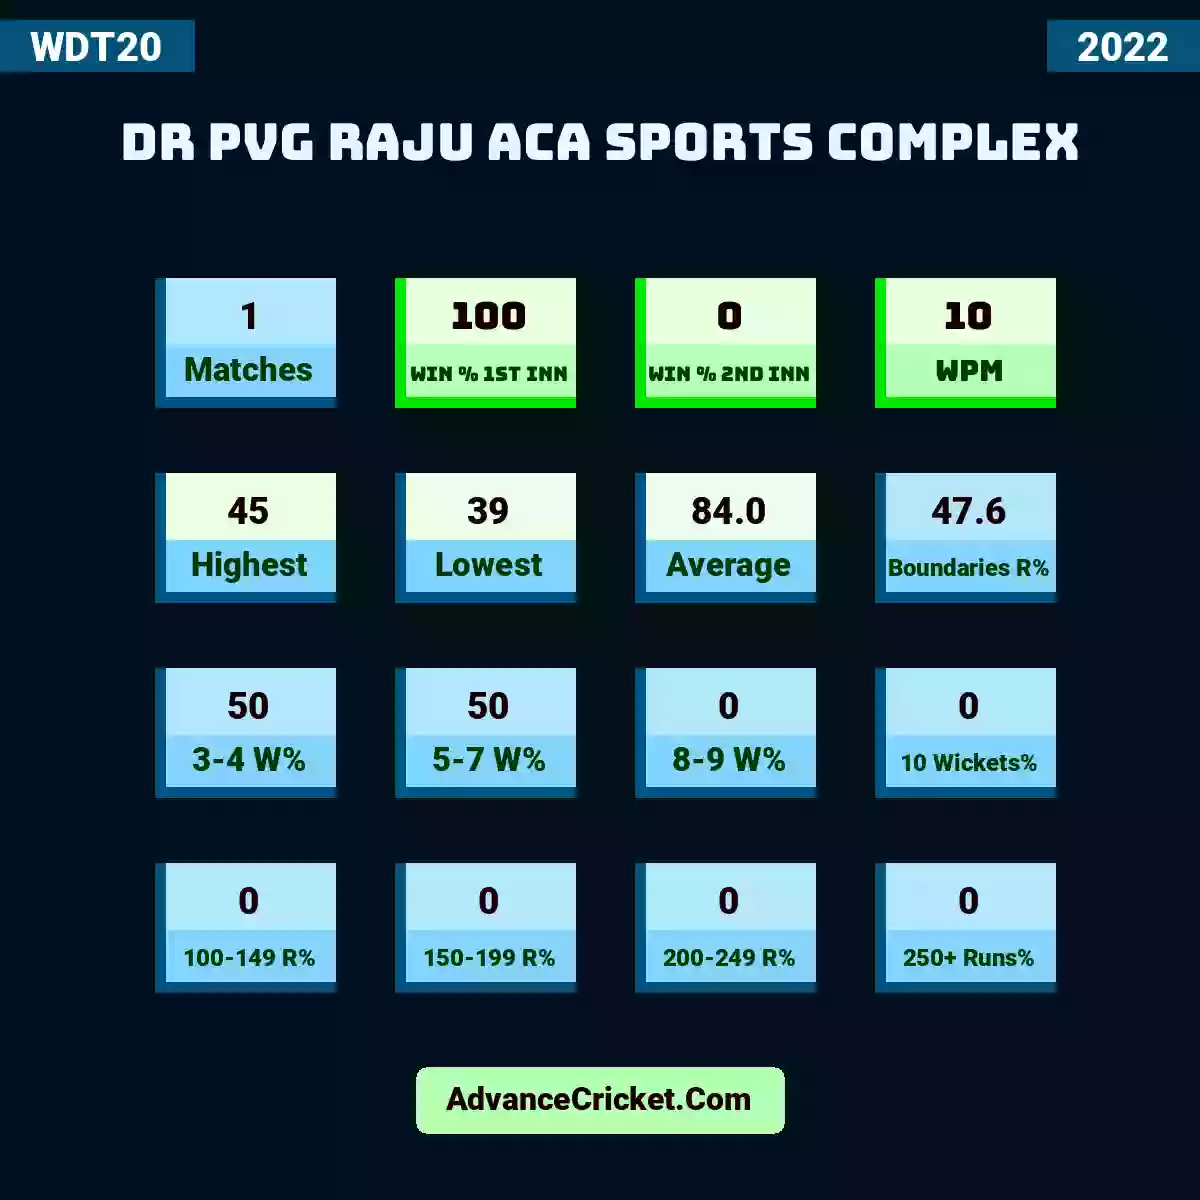 Image showing Dr PVG Raju ACA Sports Complex with Matches: 1, Win % 1st Inn: 100, Win % 2nd Inn: 0, WPM: 10, Highest: 45, Lowest: 39, Average: 84.0, Boundaries R%: 47.6, 3-4 W%: 50, 5-7 W%: 50, 8-9 W%: 0, 10 Wickets%: 0, 100-149 R%: 0, 150-199 R%: 0, 200-249 R%: 0, 250+ Runs%: 0.